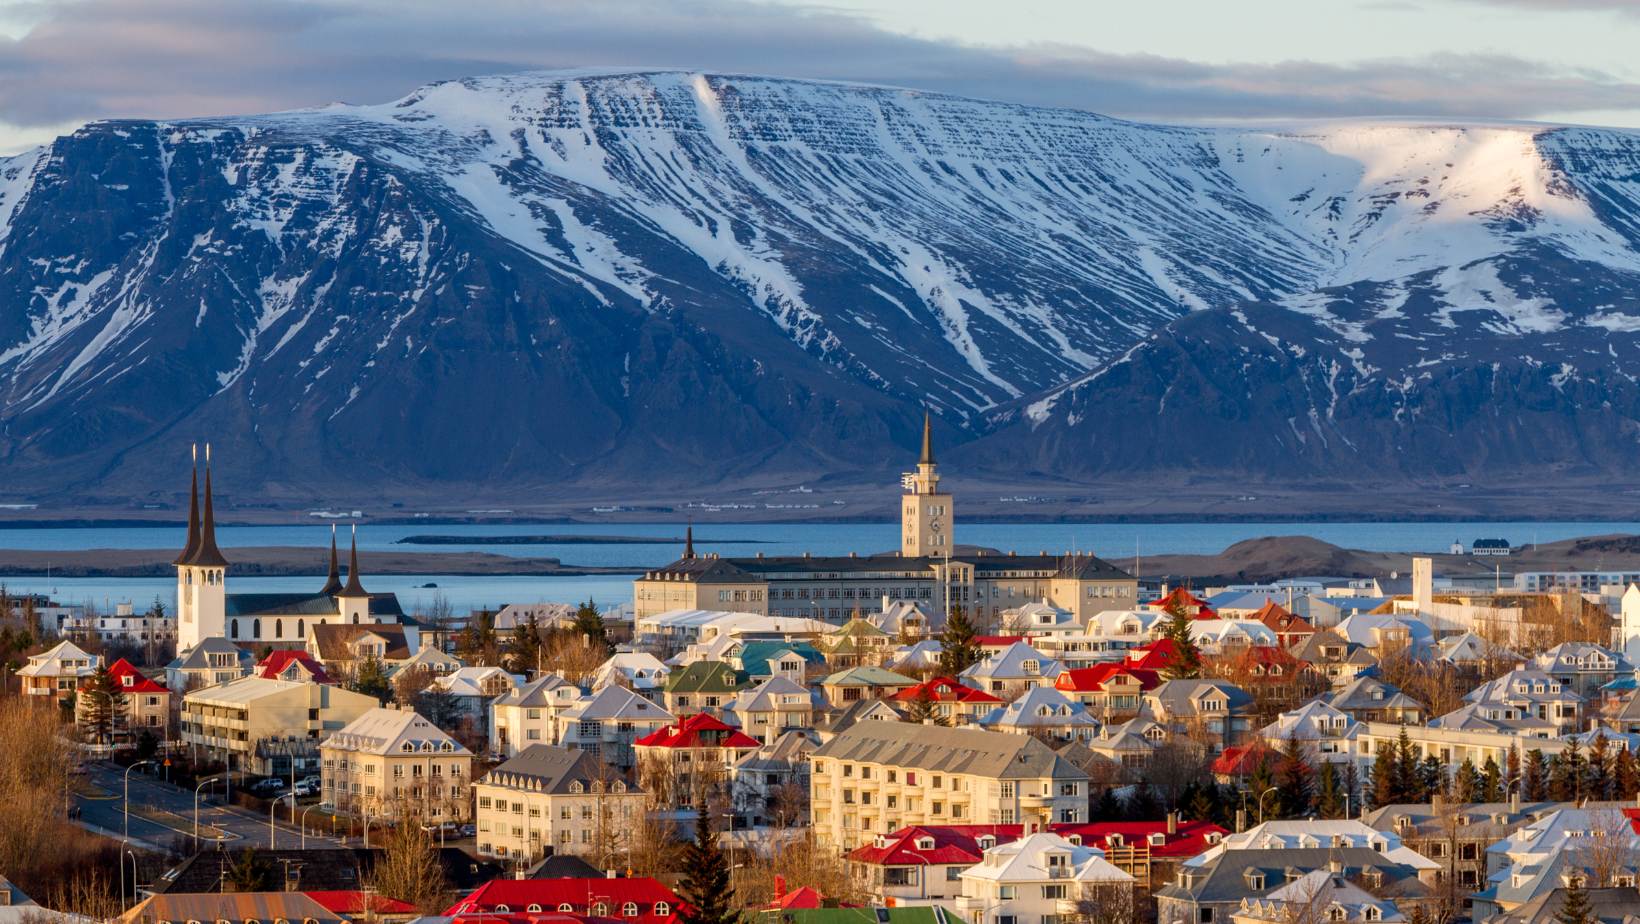 Reykjavik Iceland'S Capital City